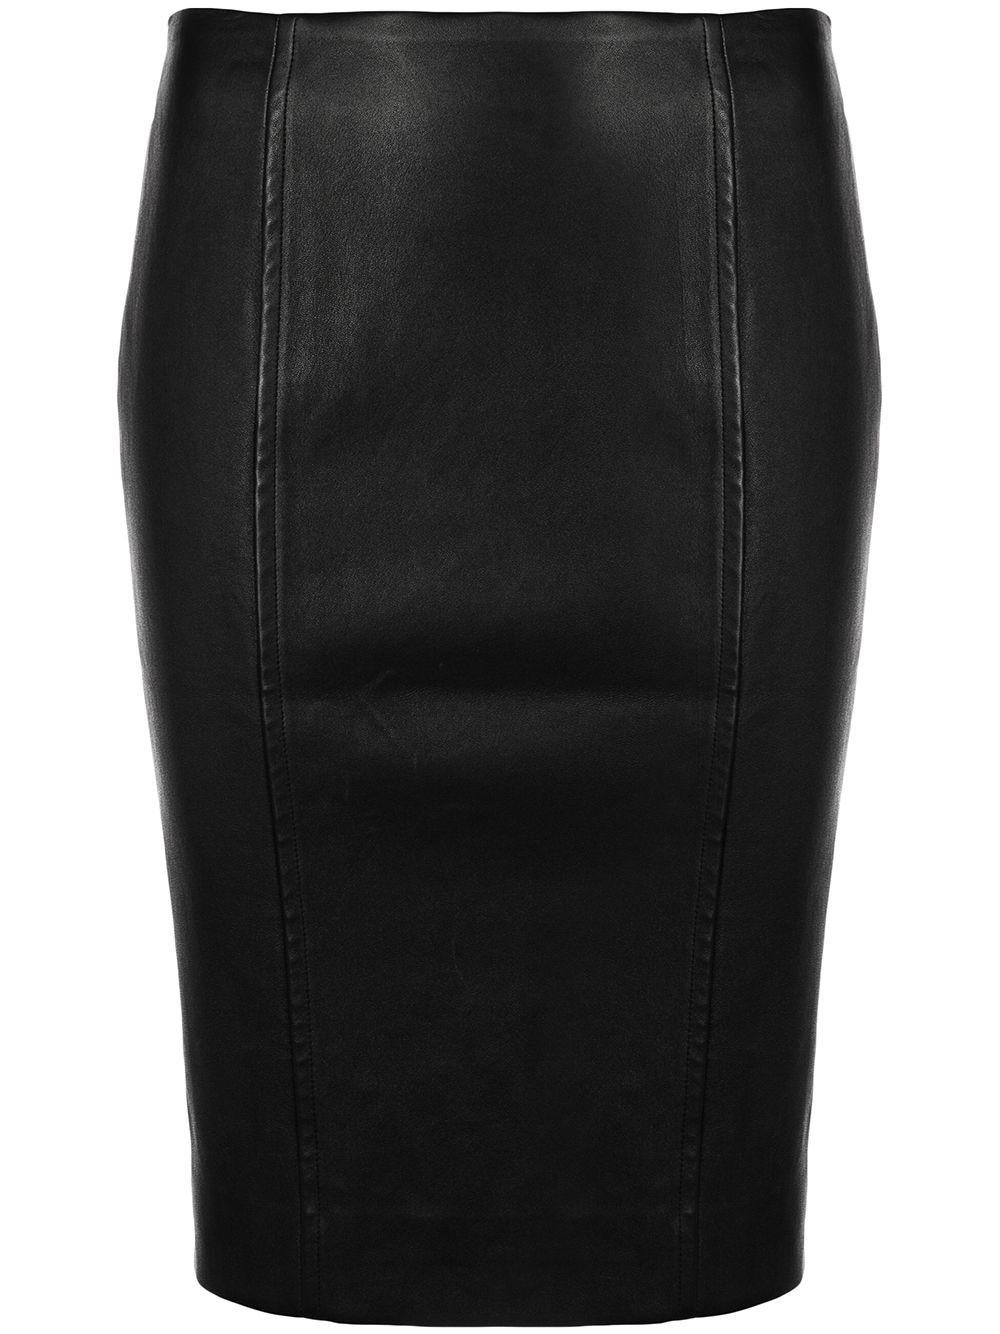 Kiki de Montparnasse leather corset pencil skirt - Black von Kiki de Montparnasse